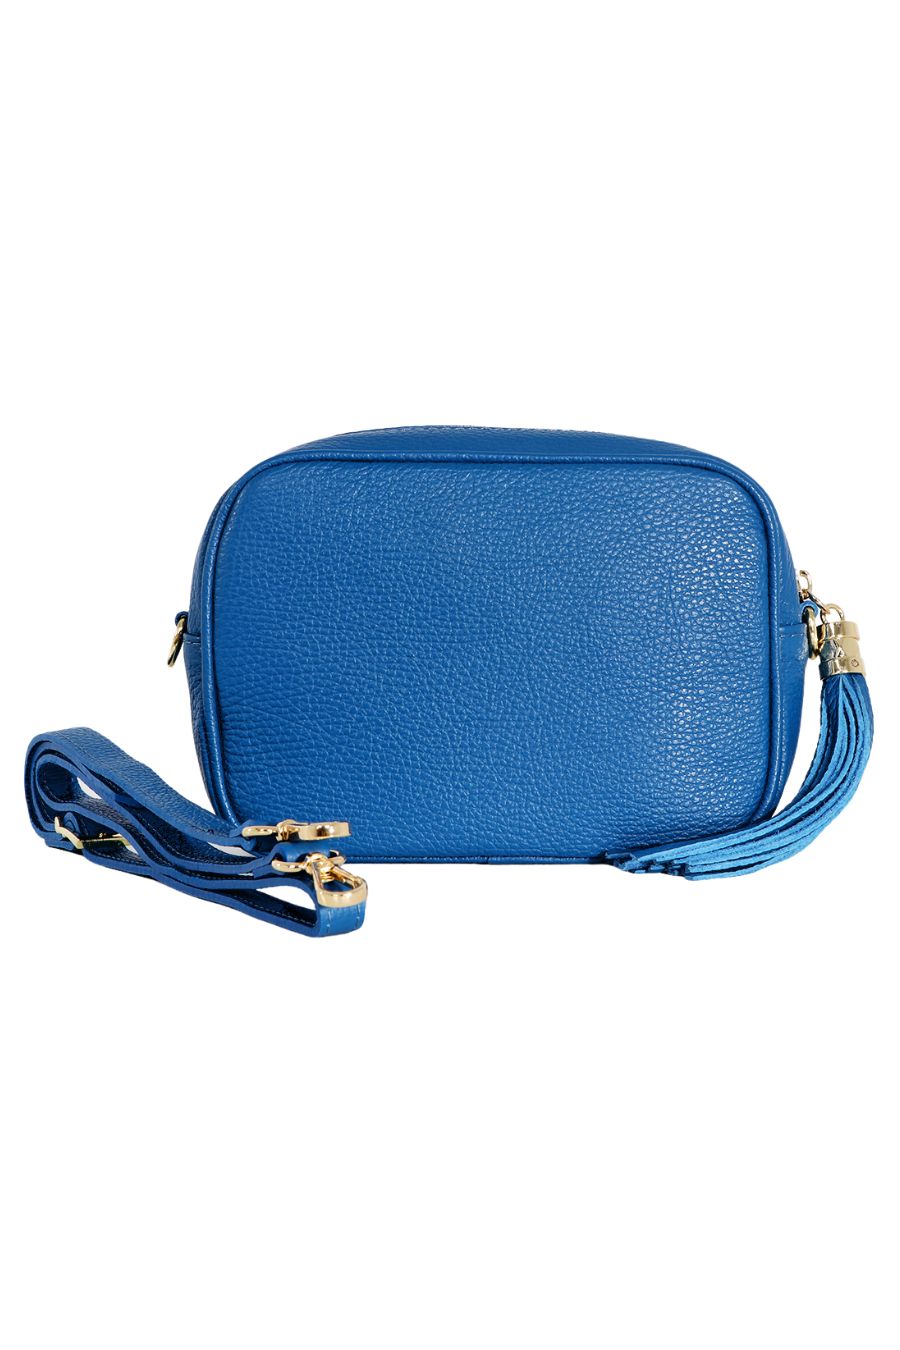 Royal Blue Genuine Italian Leather Camera Bag